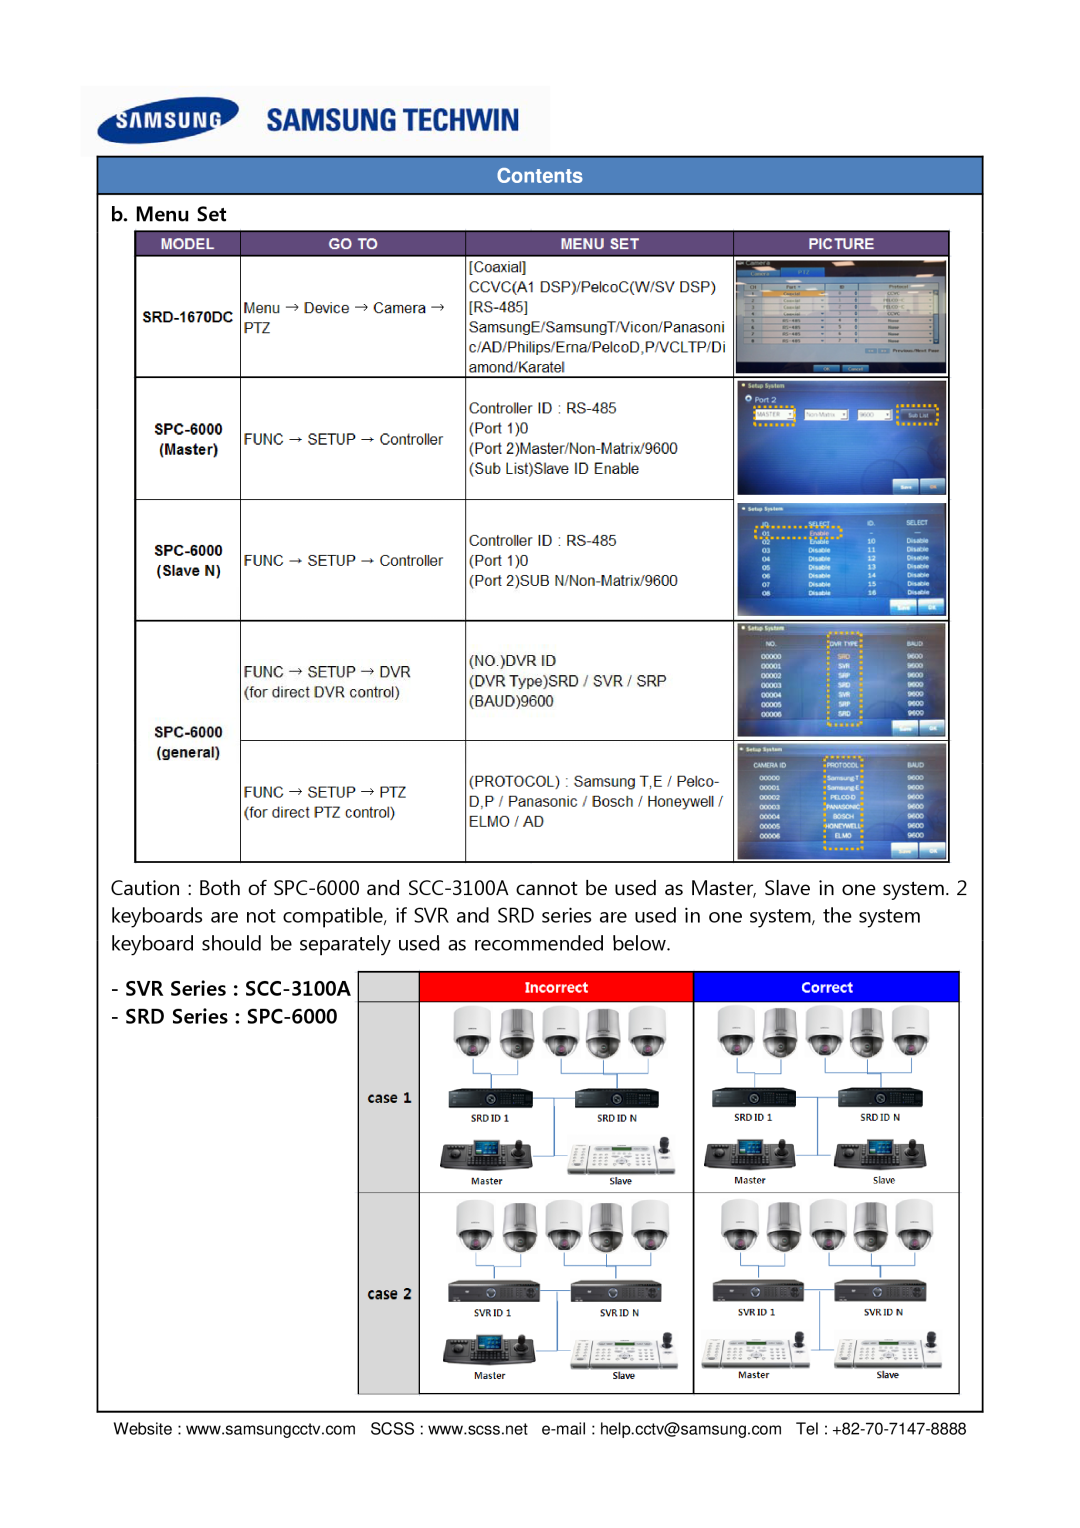 Samsung setup guide b. Menu Set, SVR Series SCC-3100A SRD Series SPC-6000, Contents 